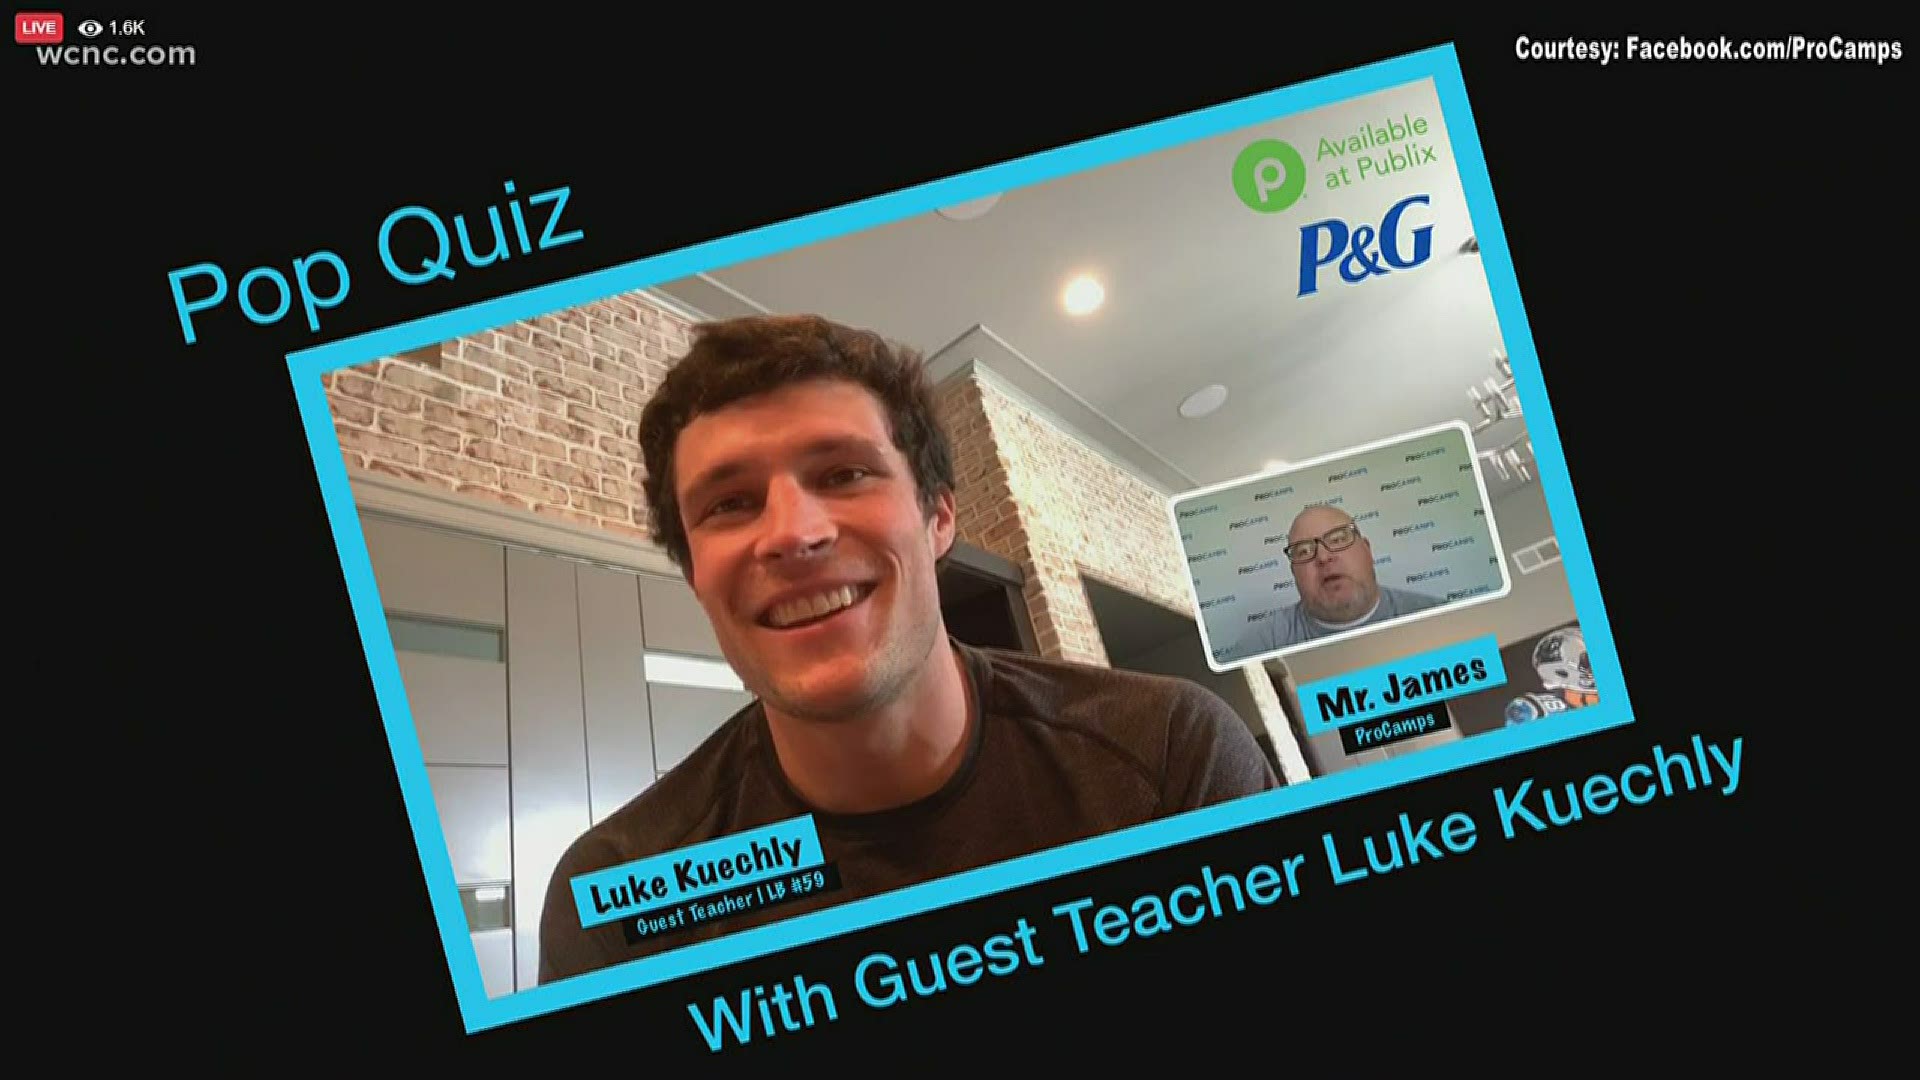 Former Carolina Panther, Luke Kuechly has fun over a virtual class and helps teach.